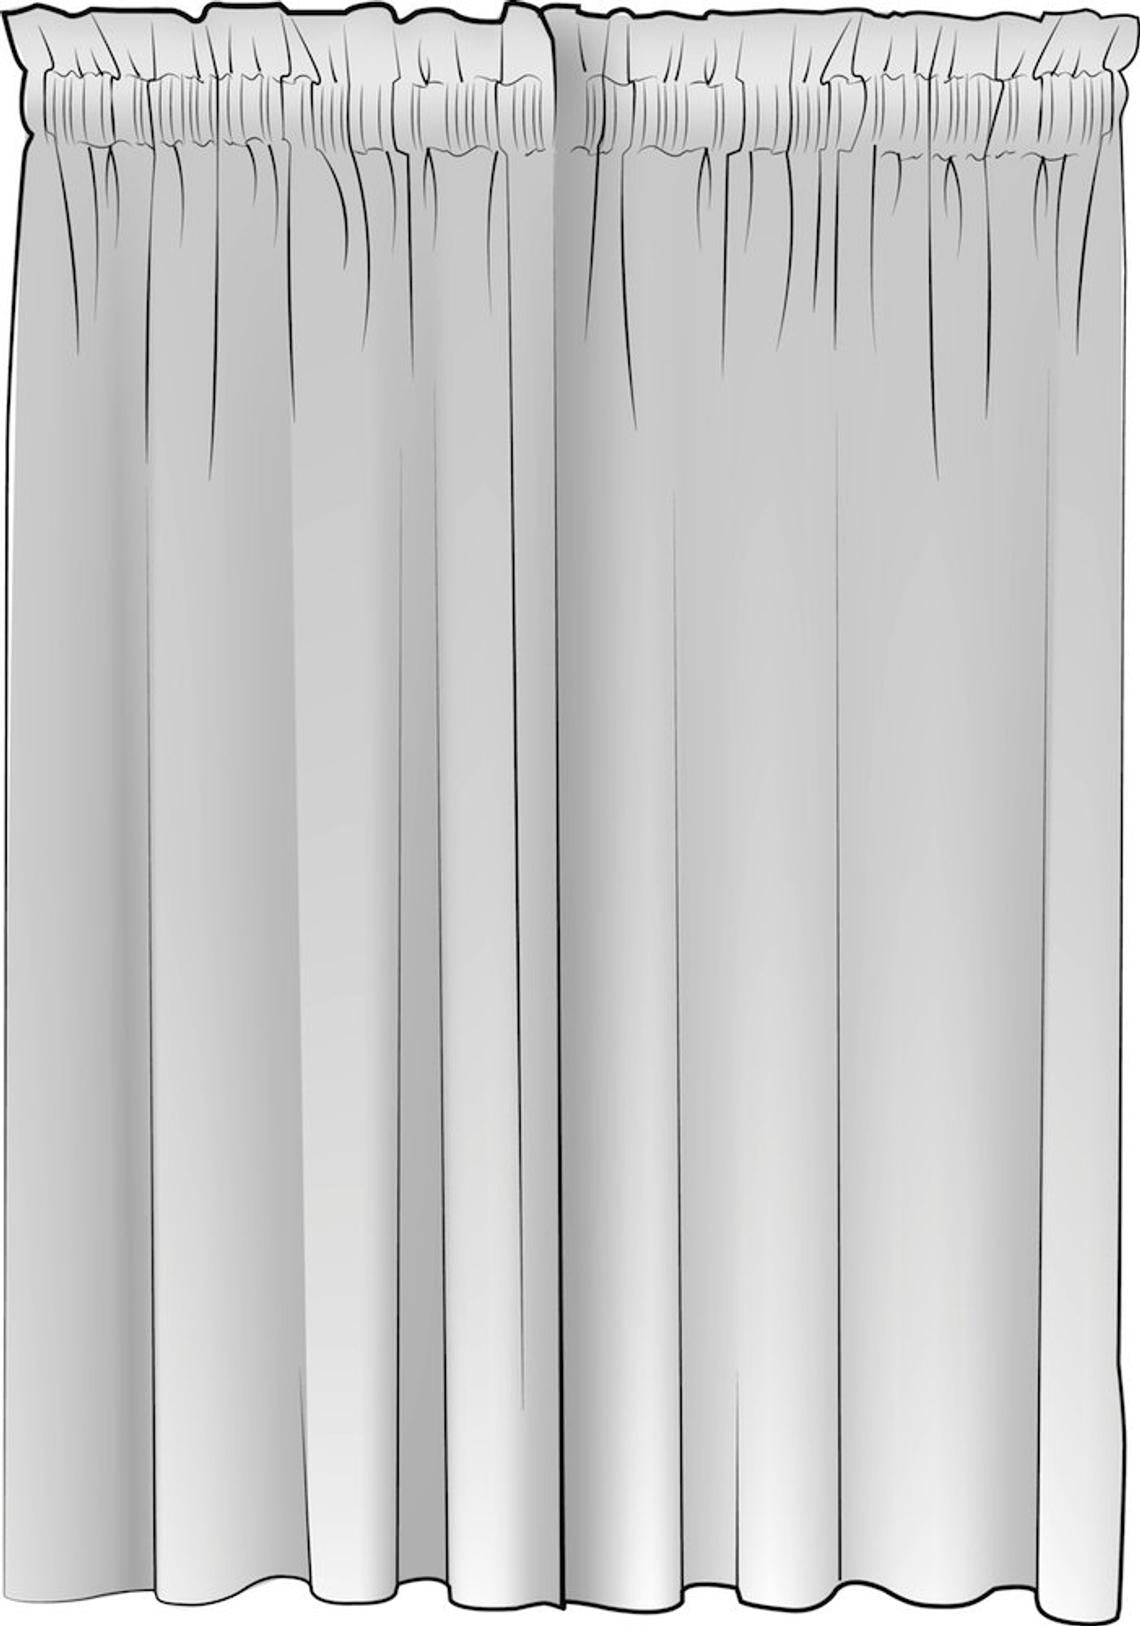 rod pocket curtain panels pair in farmhouse meadow green ticking stripe on cream